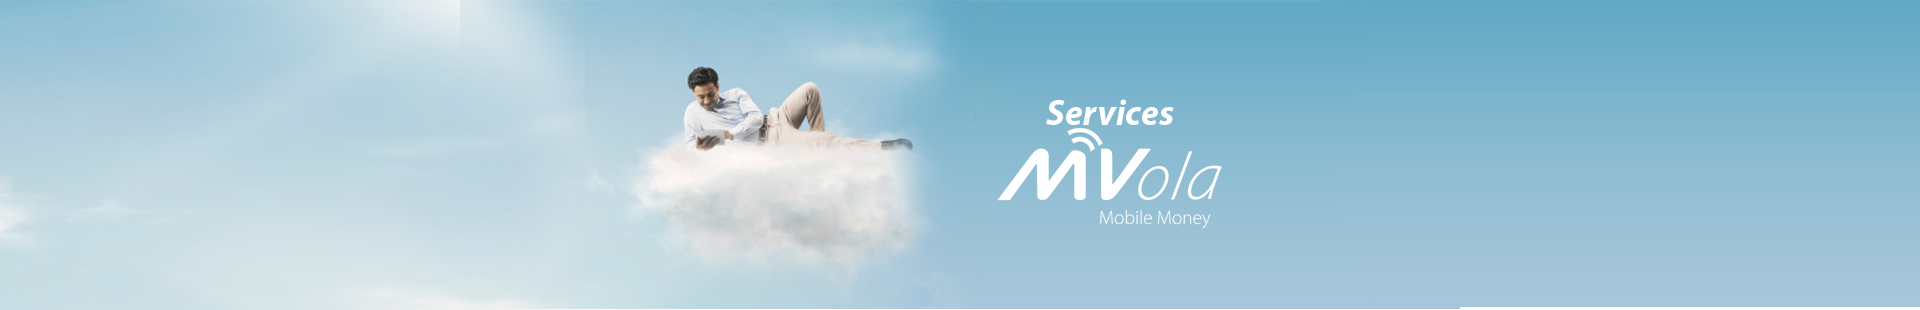 Services MVola